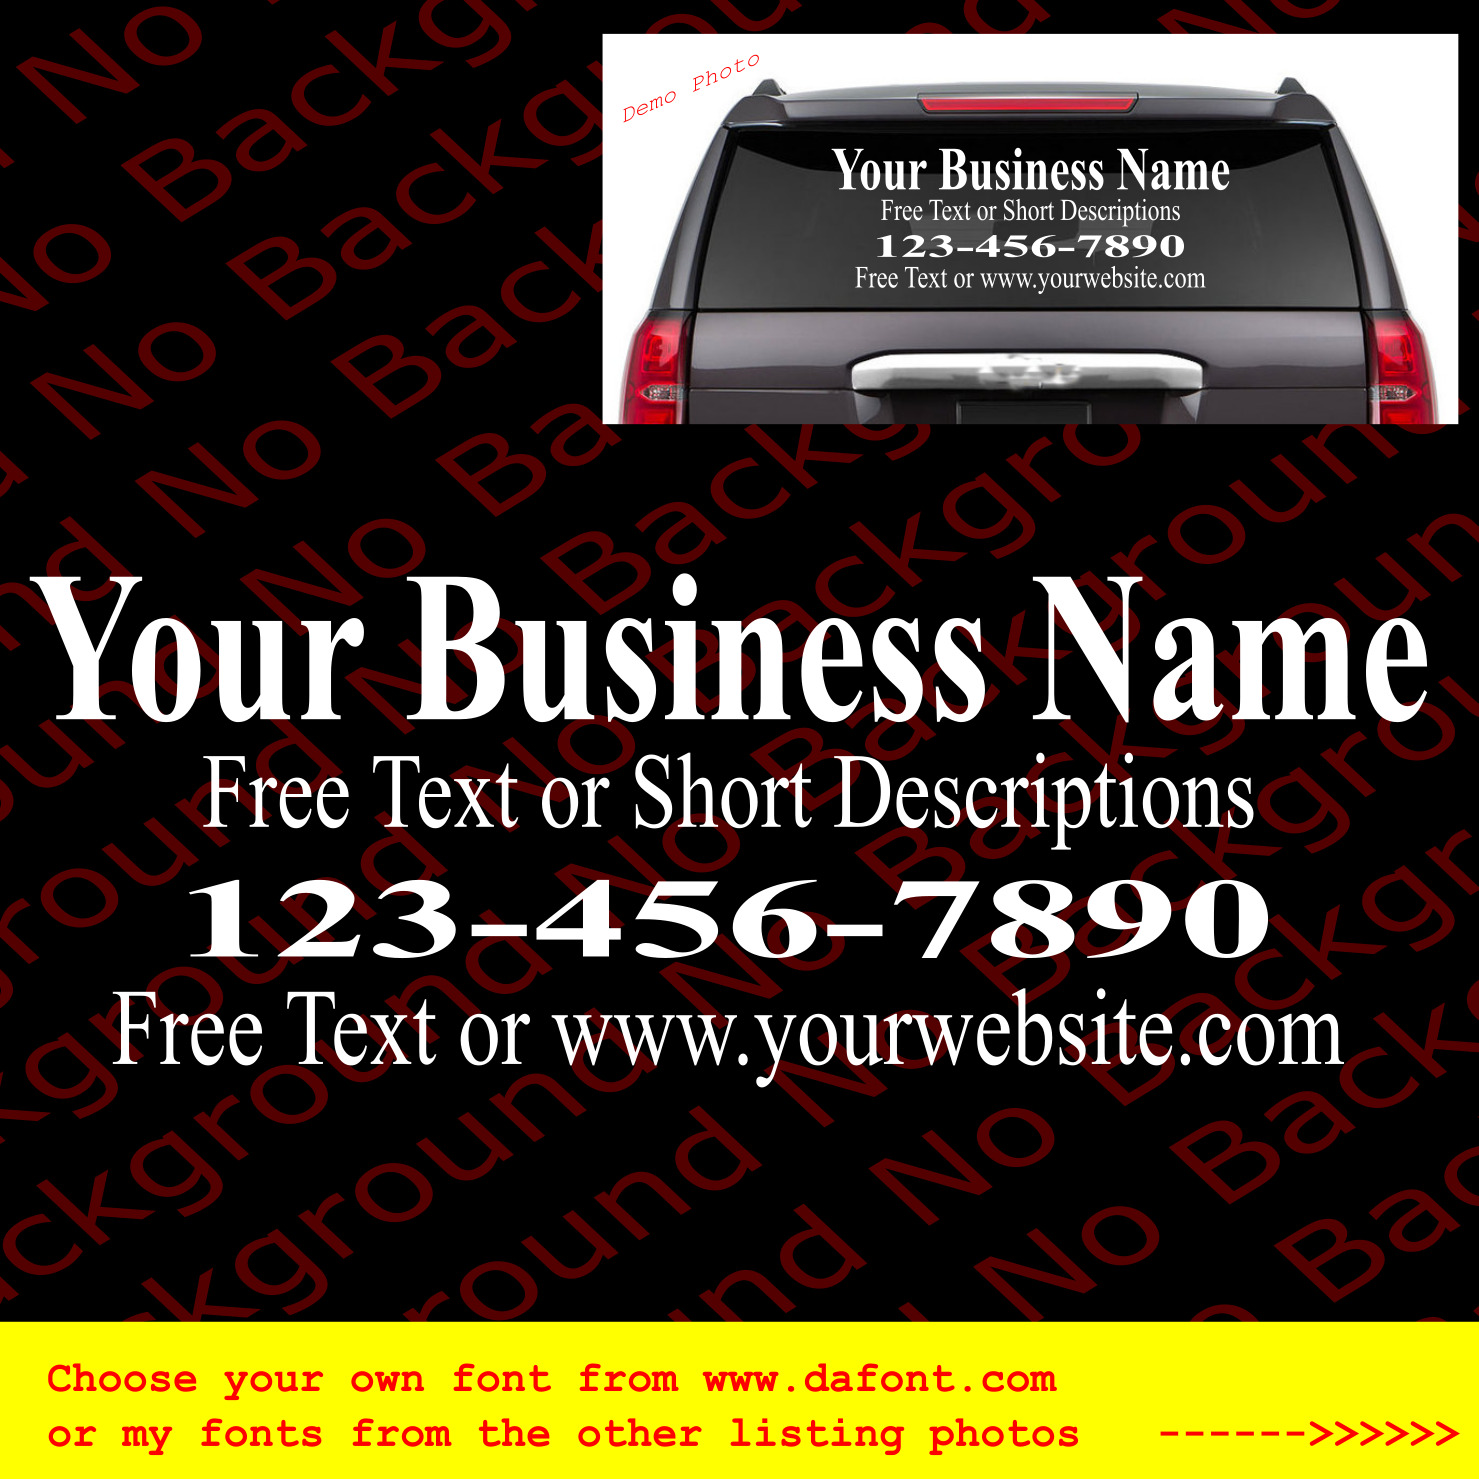 Custom Business Company Name Information Car Truck Back Window Vinyl Decal BS018